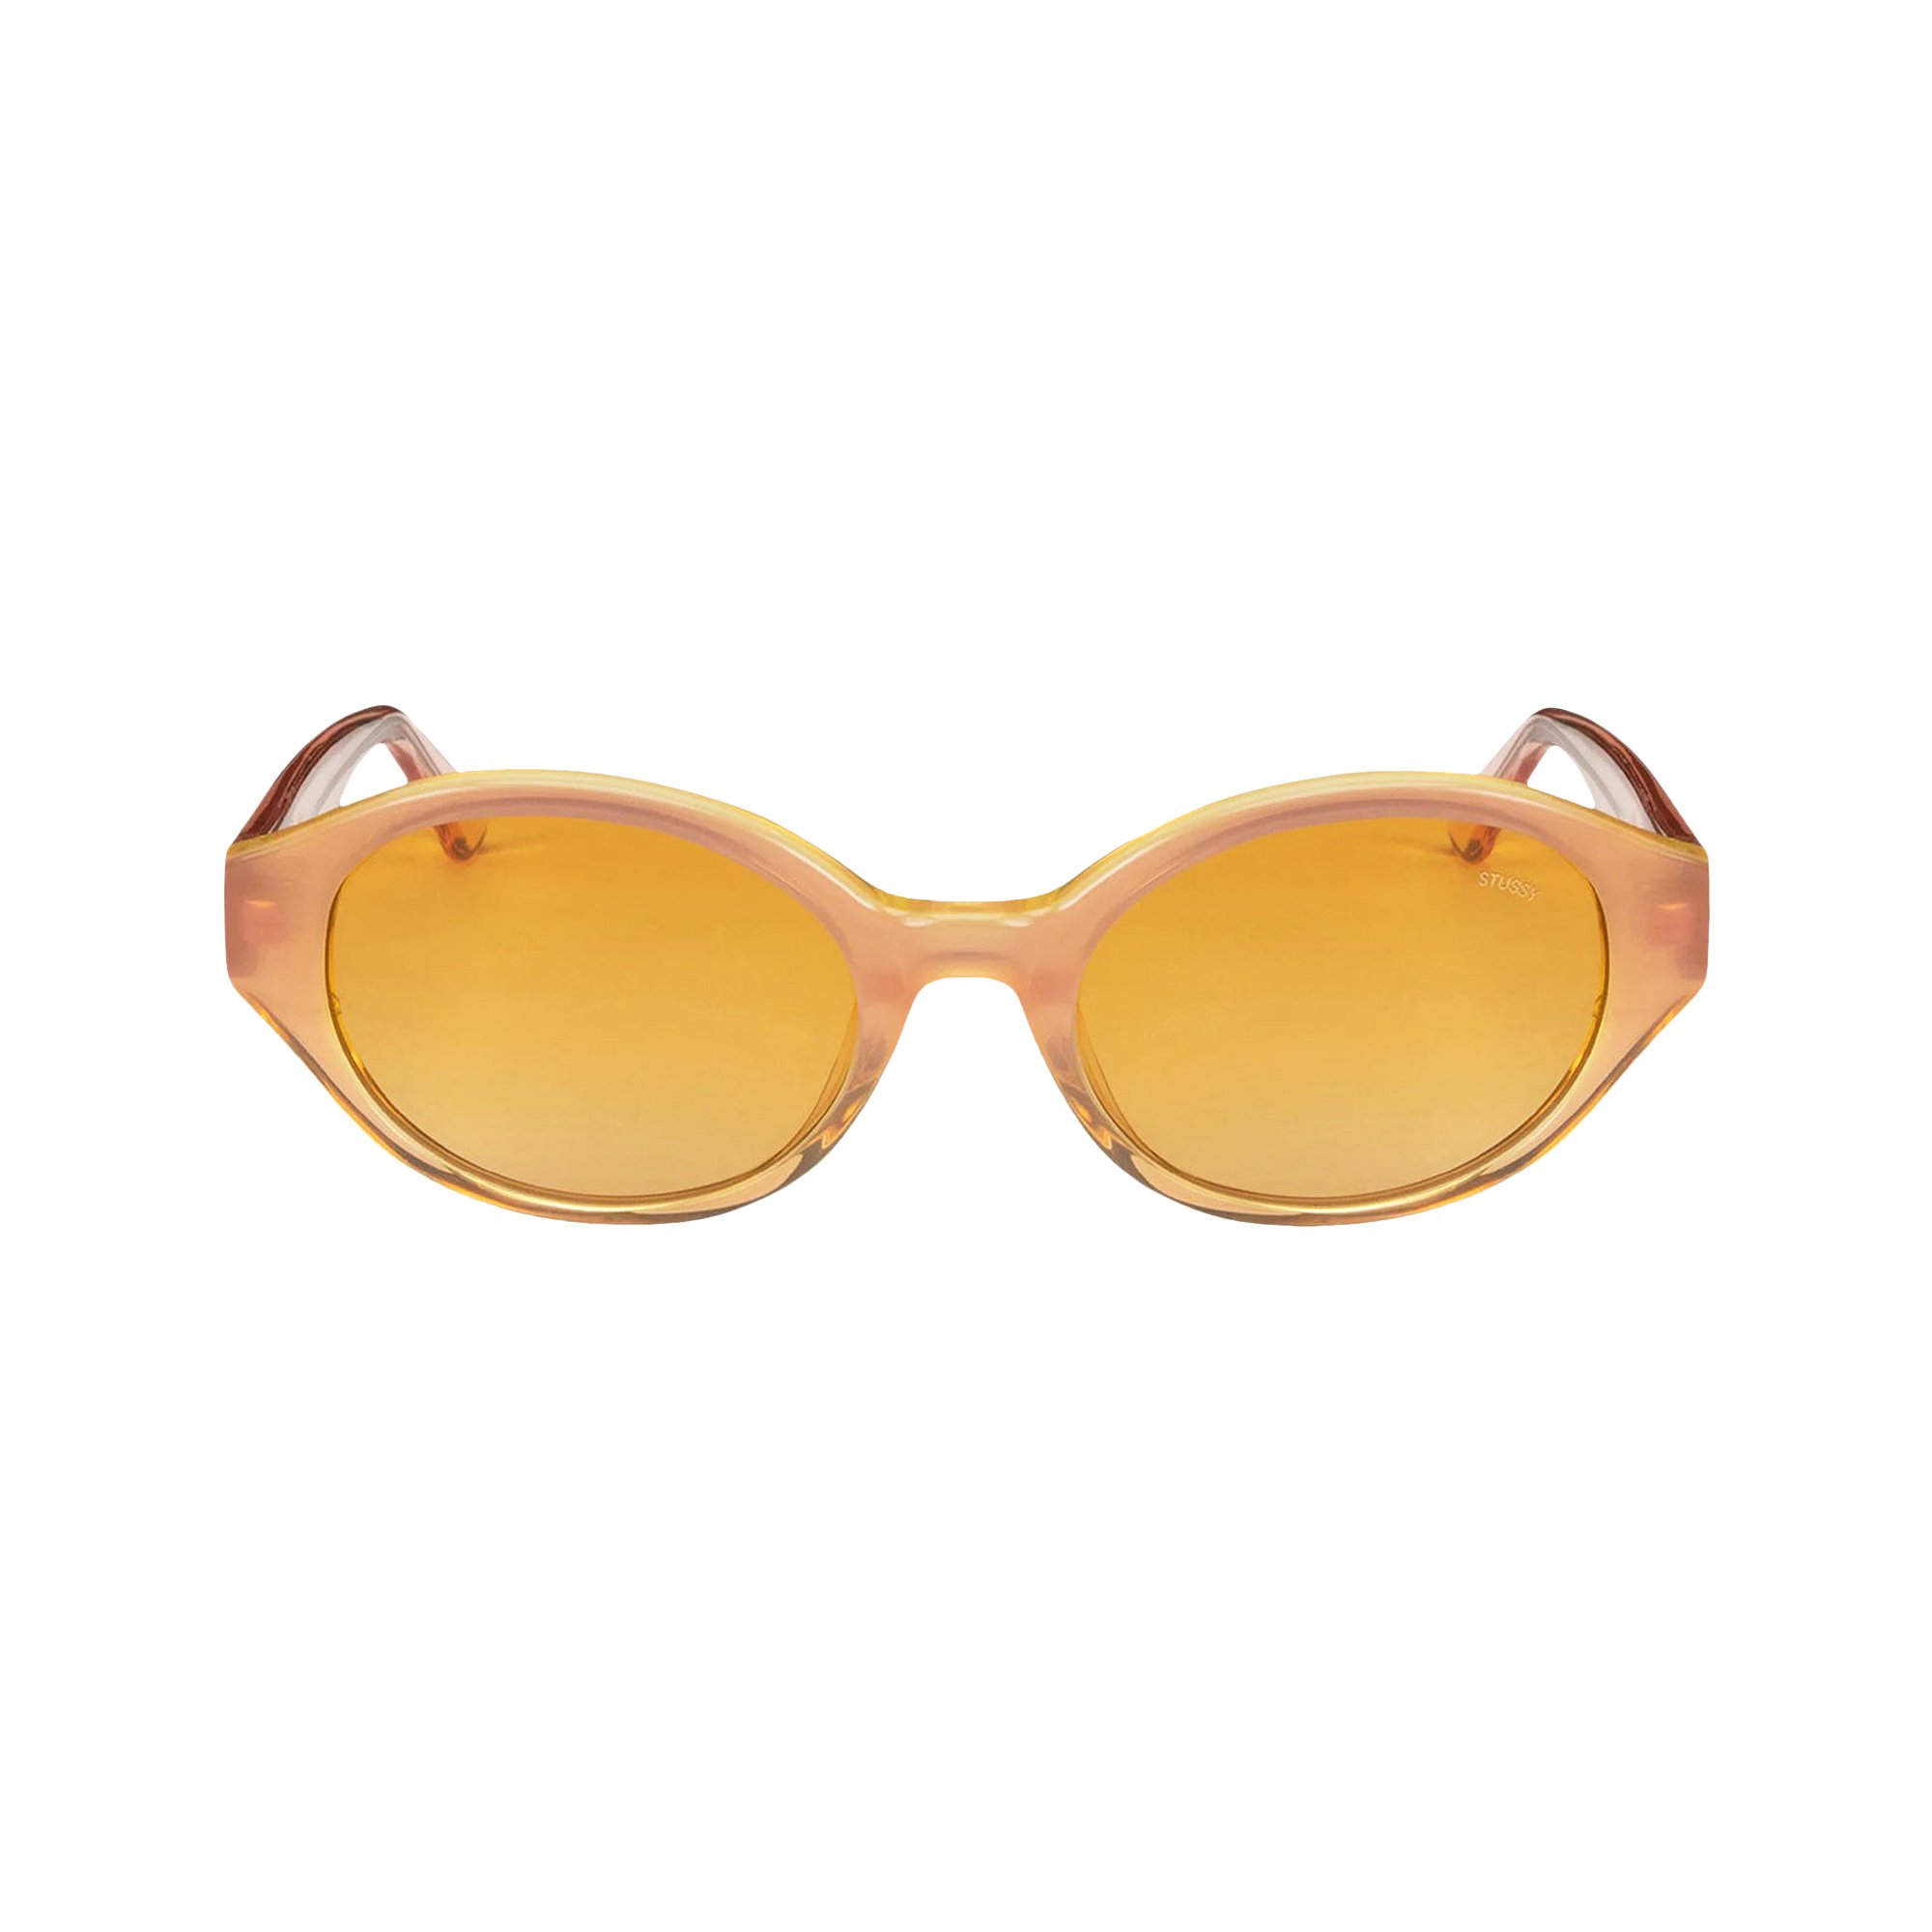 Buy Stussy Penn Sunglasses 'Peach Gradient/Peach' - 338209 PEAC